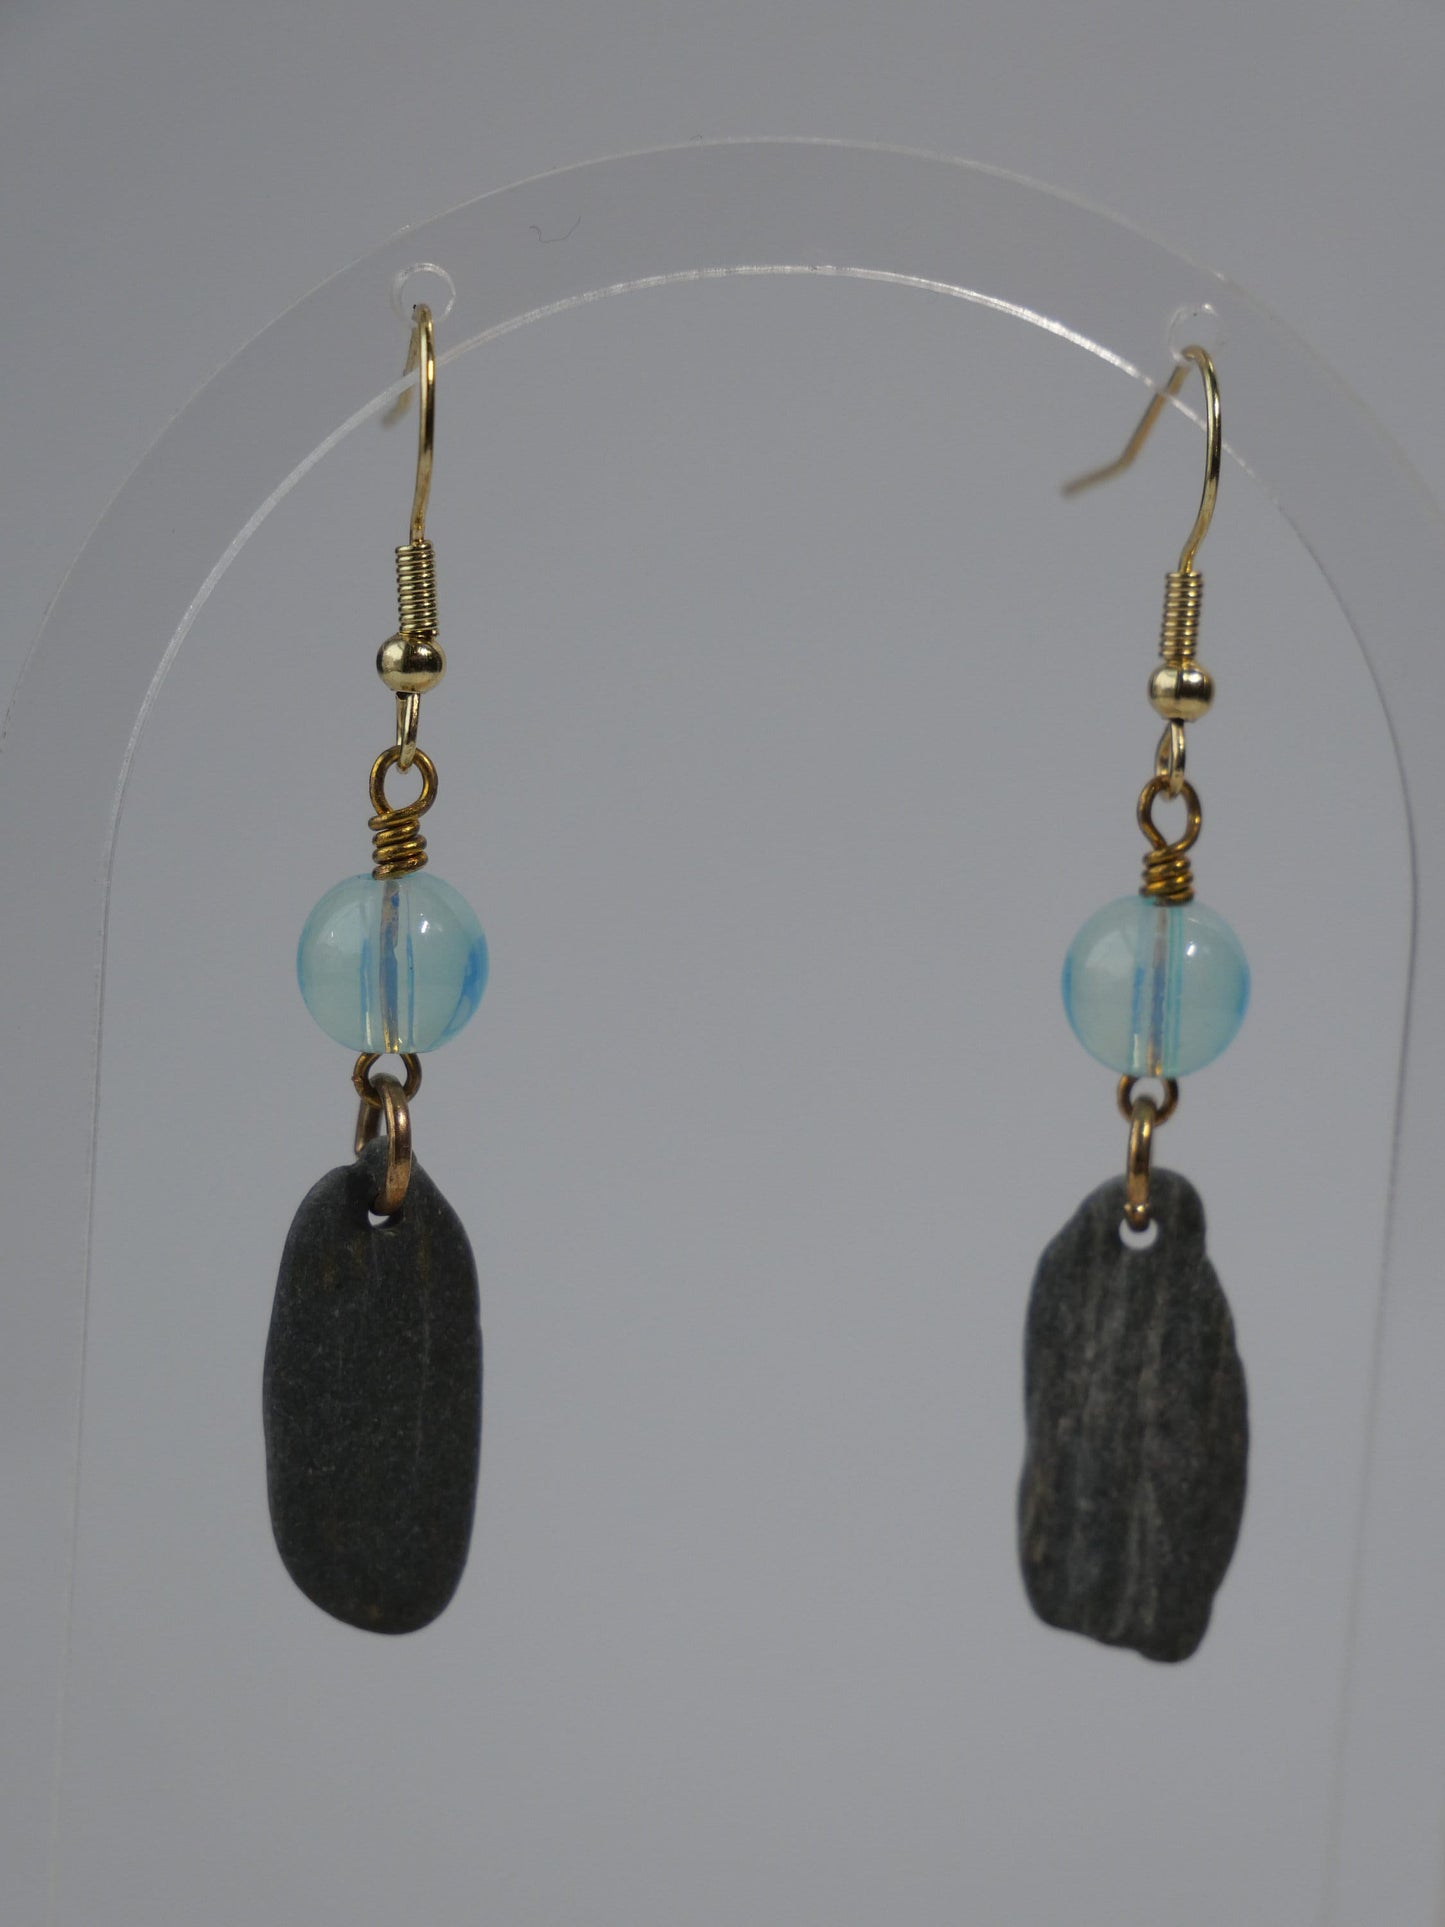 Maine Beach Rock & Glass Bead Statement Earrings, inspired by Maine, Made in Maine, Maine Art, Maine Jewelry, Maine Art.